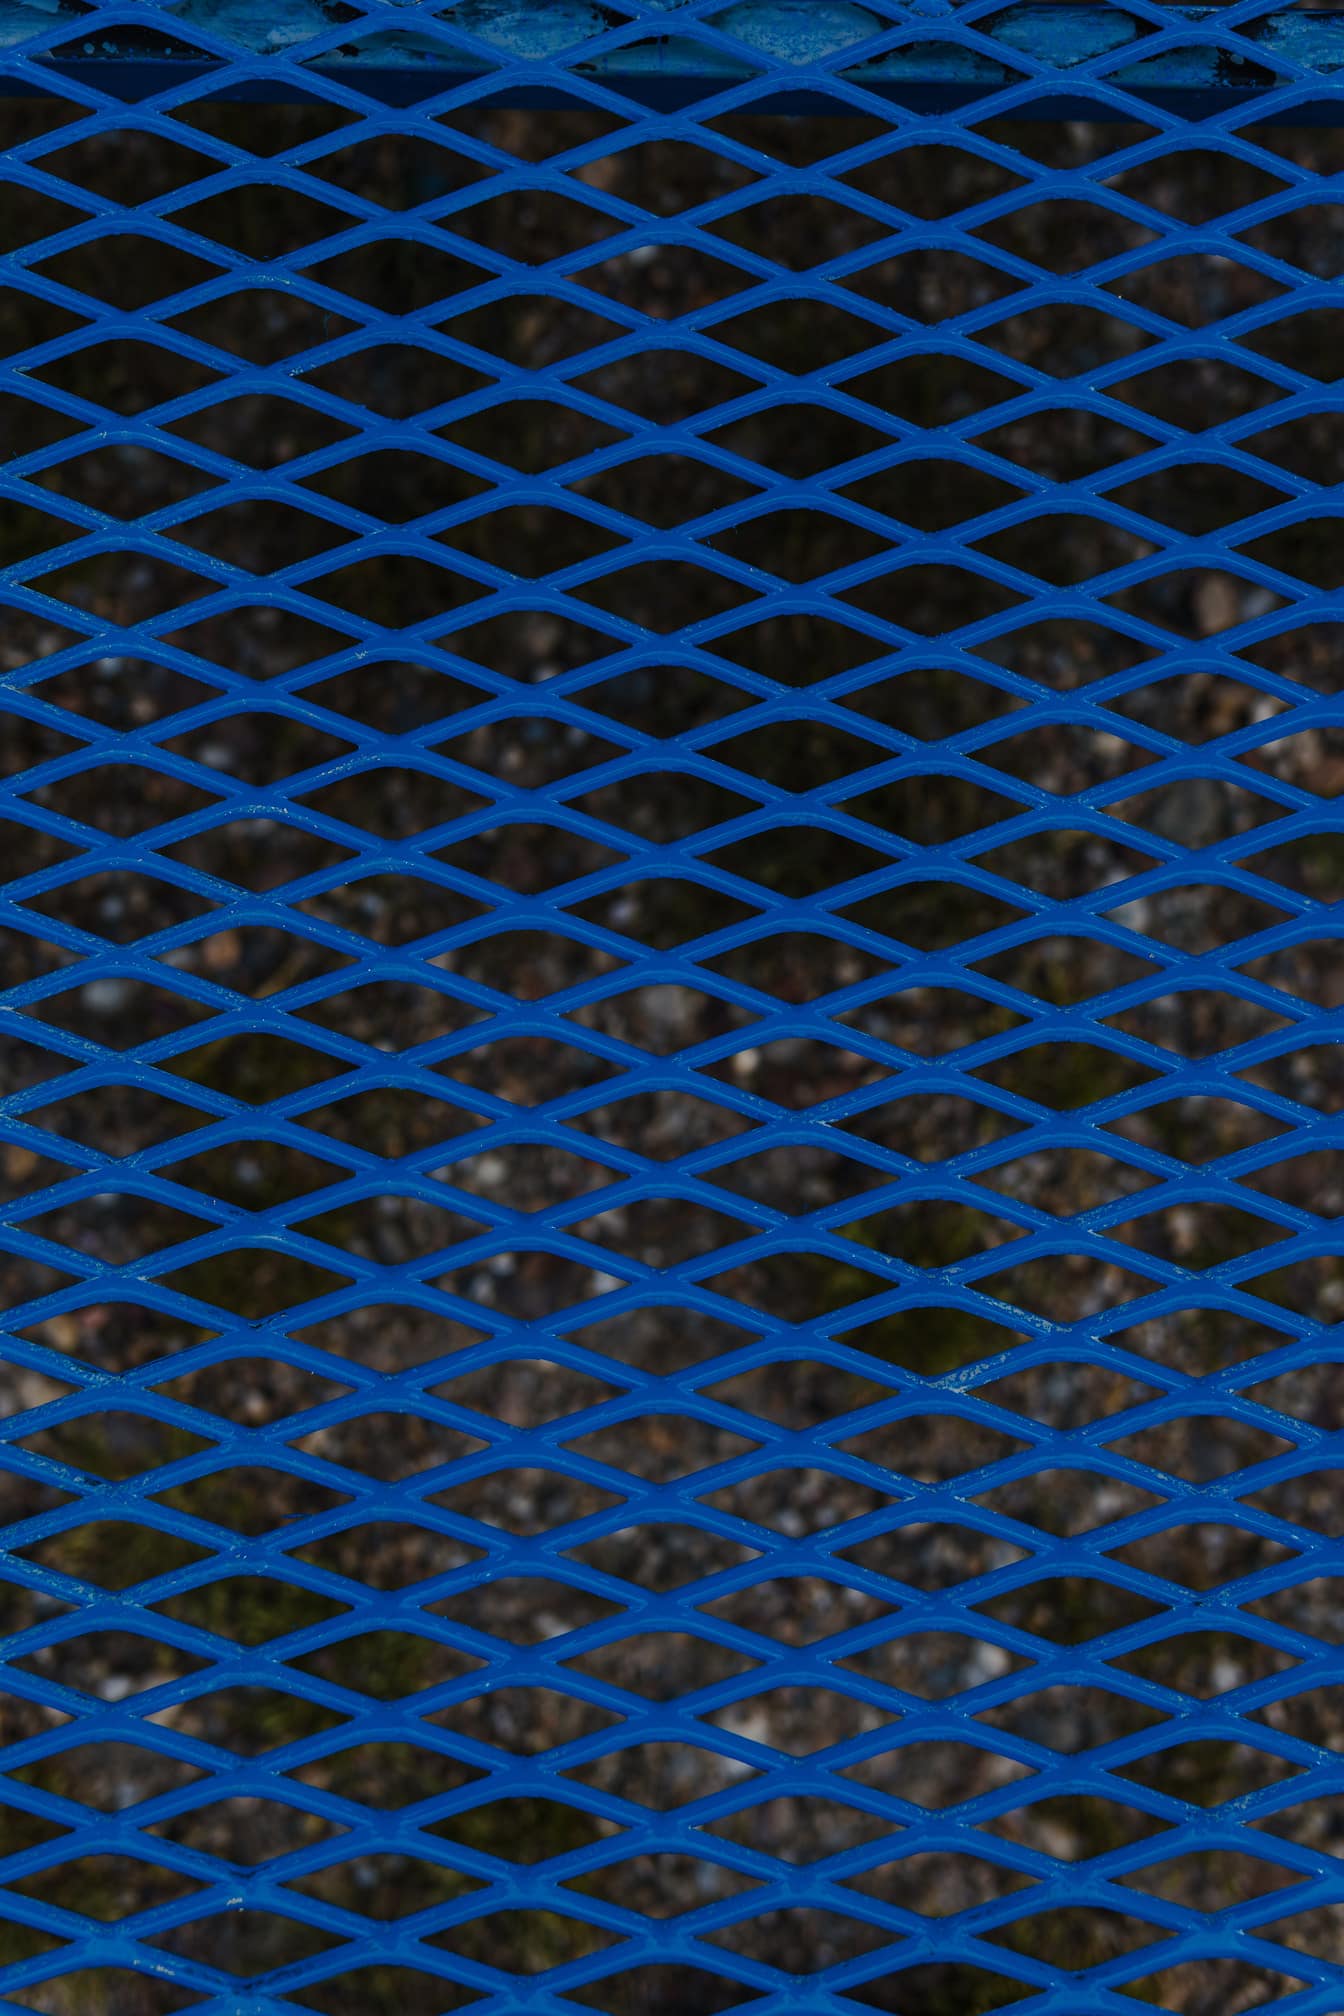 Tekstur kisi-kisi logam biru tua dengan pola geometris belah ketupat